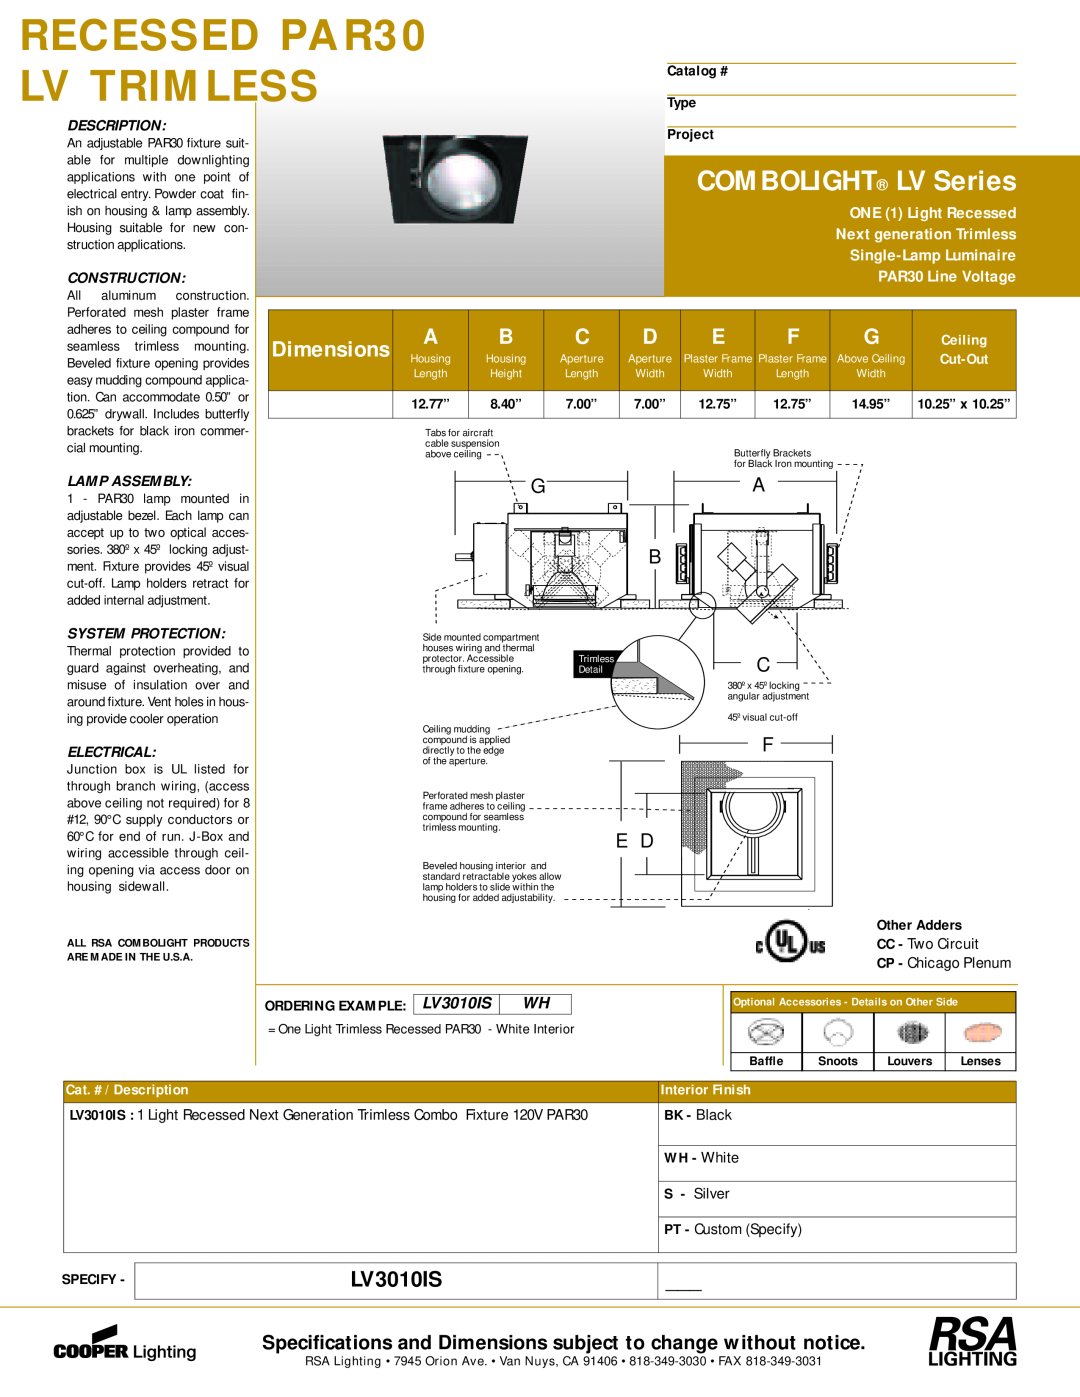 Cooper Lighting LV3010IS dimensions RECESSED PAR30, Lv Trimless, COMBOLIGHT LV Series, Dimensions, PAR30 Line Voltage 